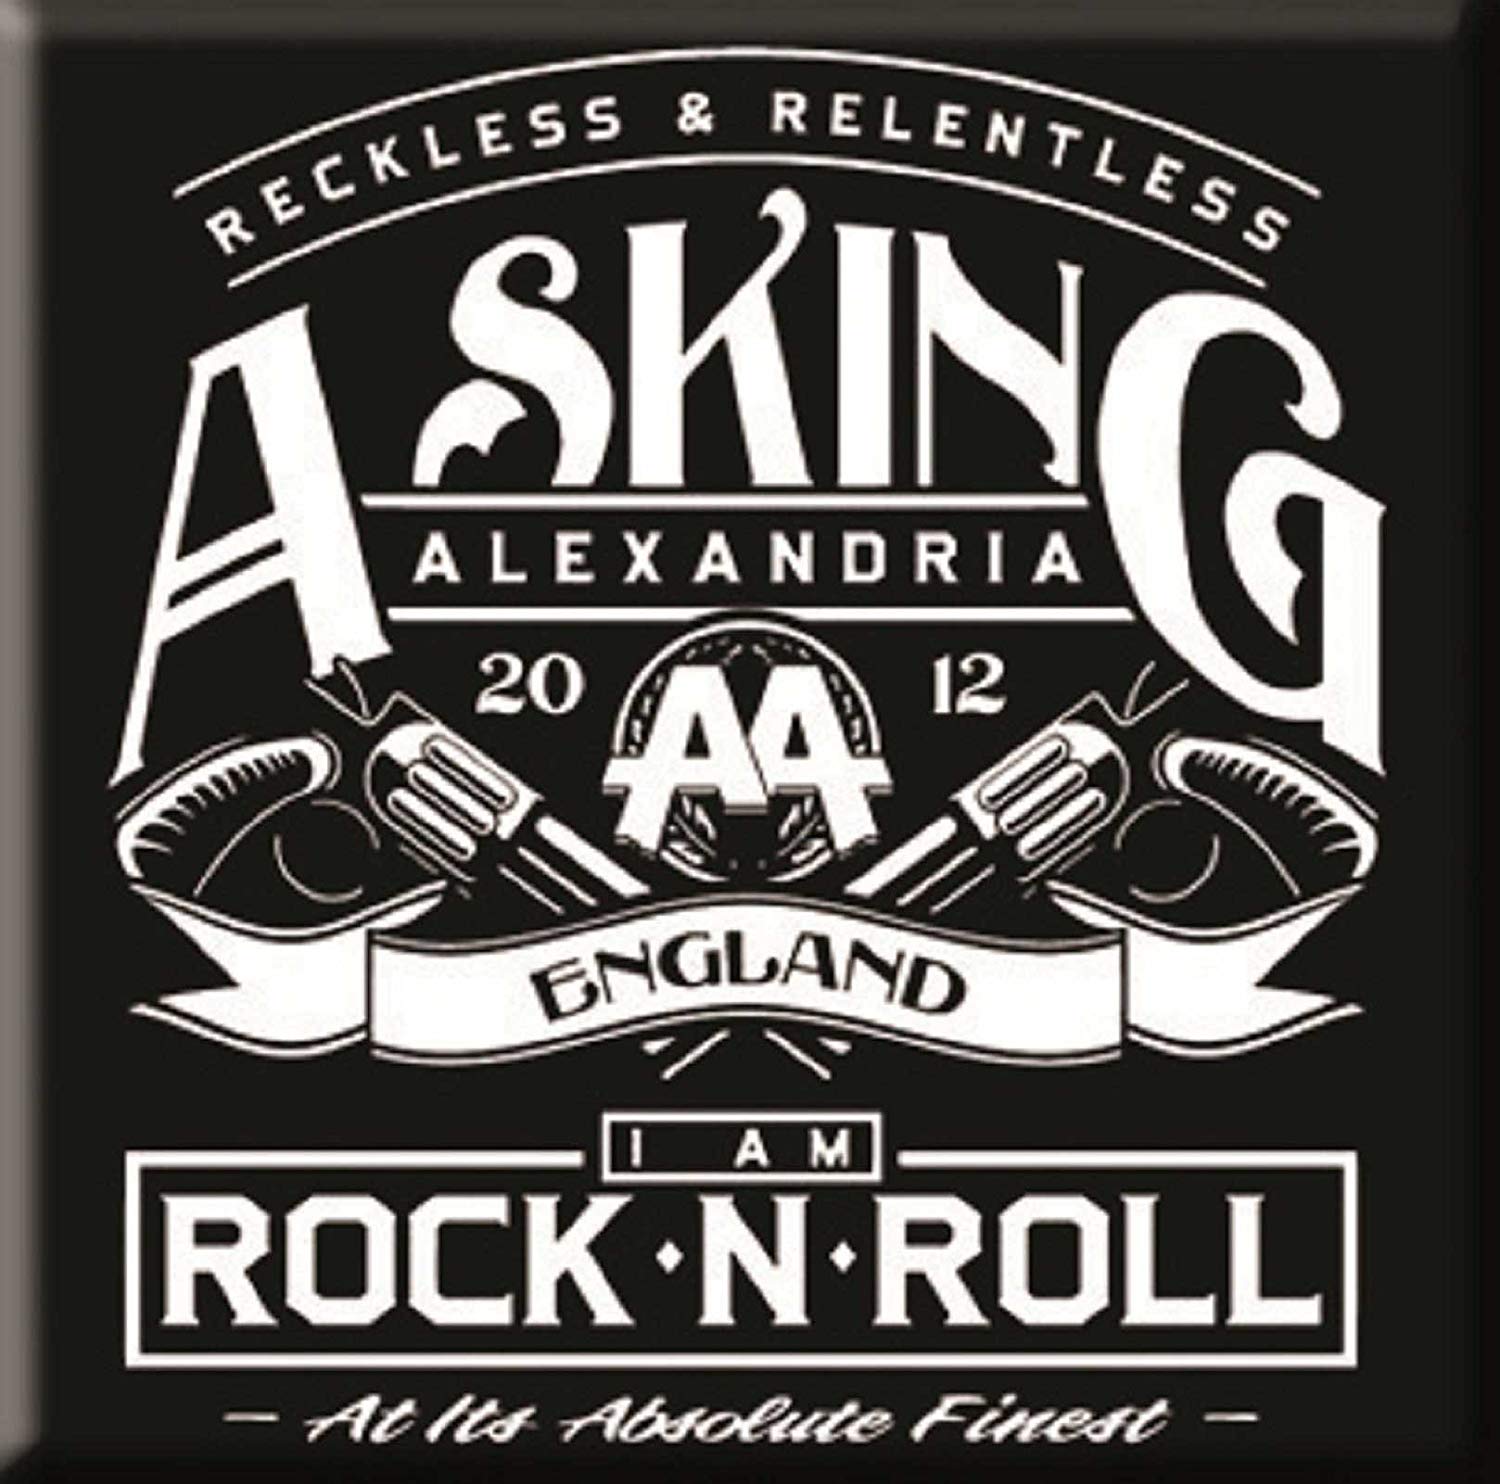 Rock and Roll Band Logo - Amazon.com: Asking Alexandria Fridge Magnet Band Logo Rock N Roll ...